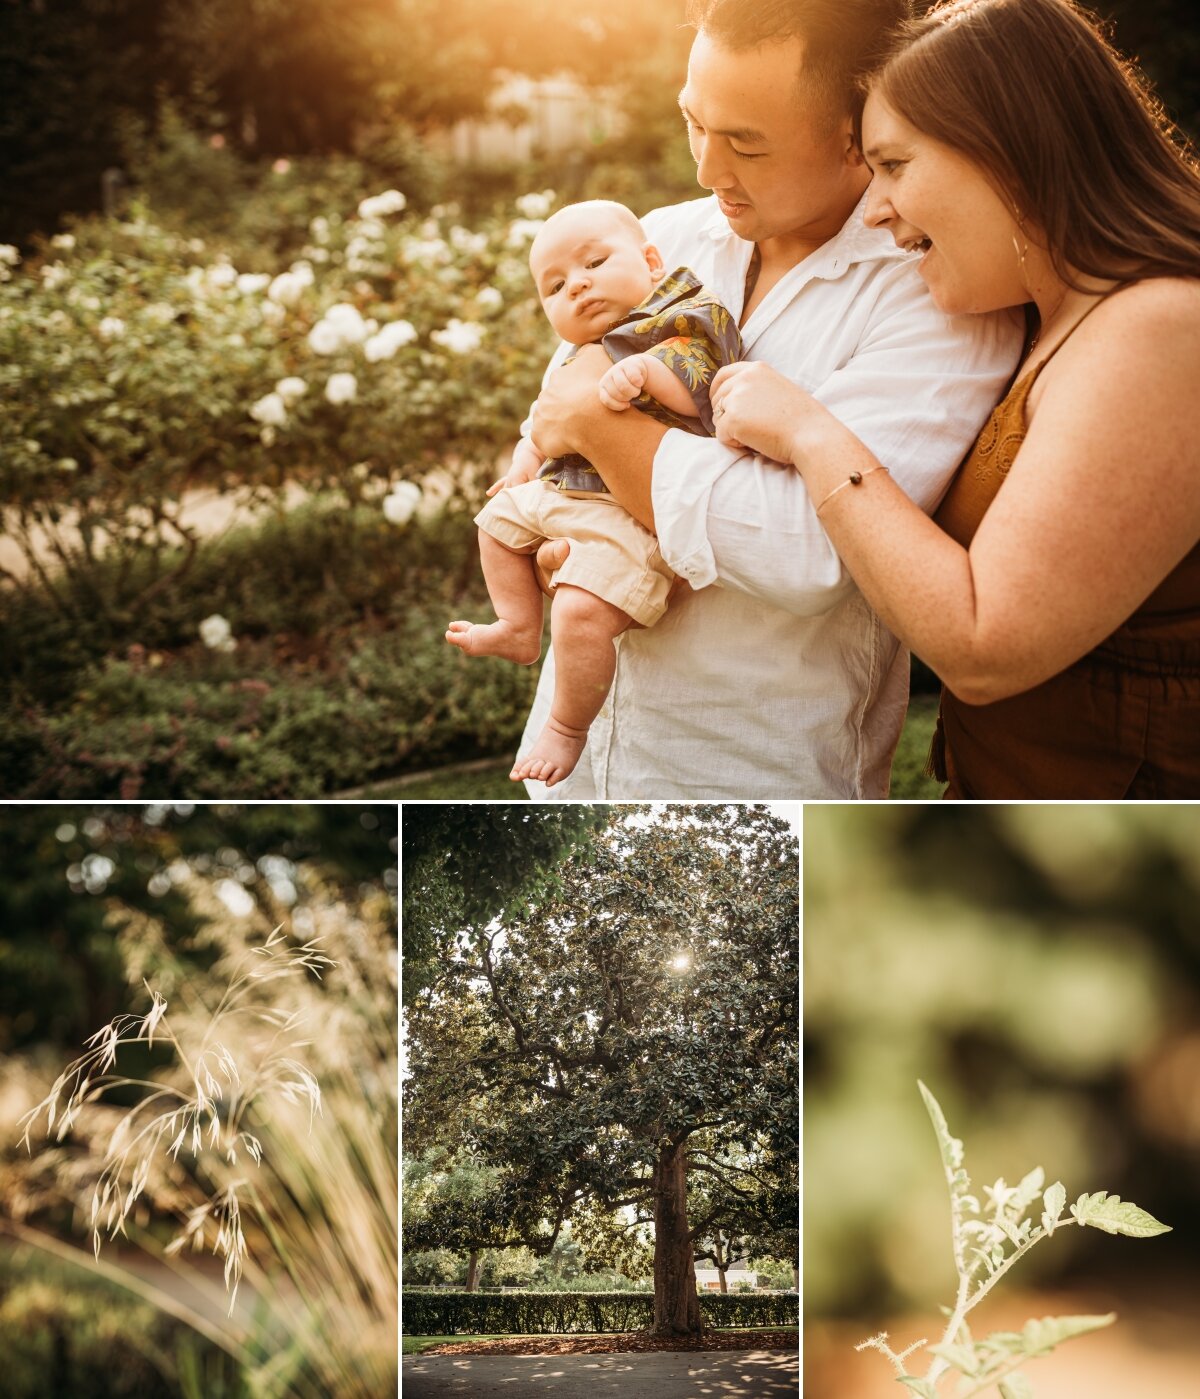 Baby Wade at Gamble Gardens - Palo Alto Newborn Lifestyle Photographer 19.jpg